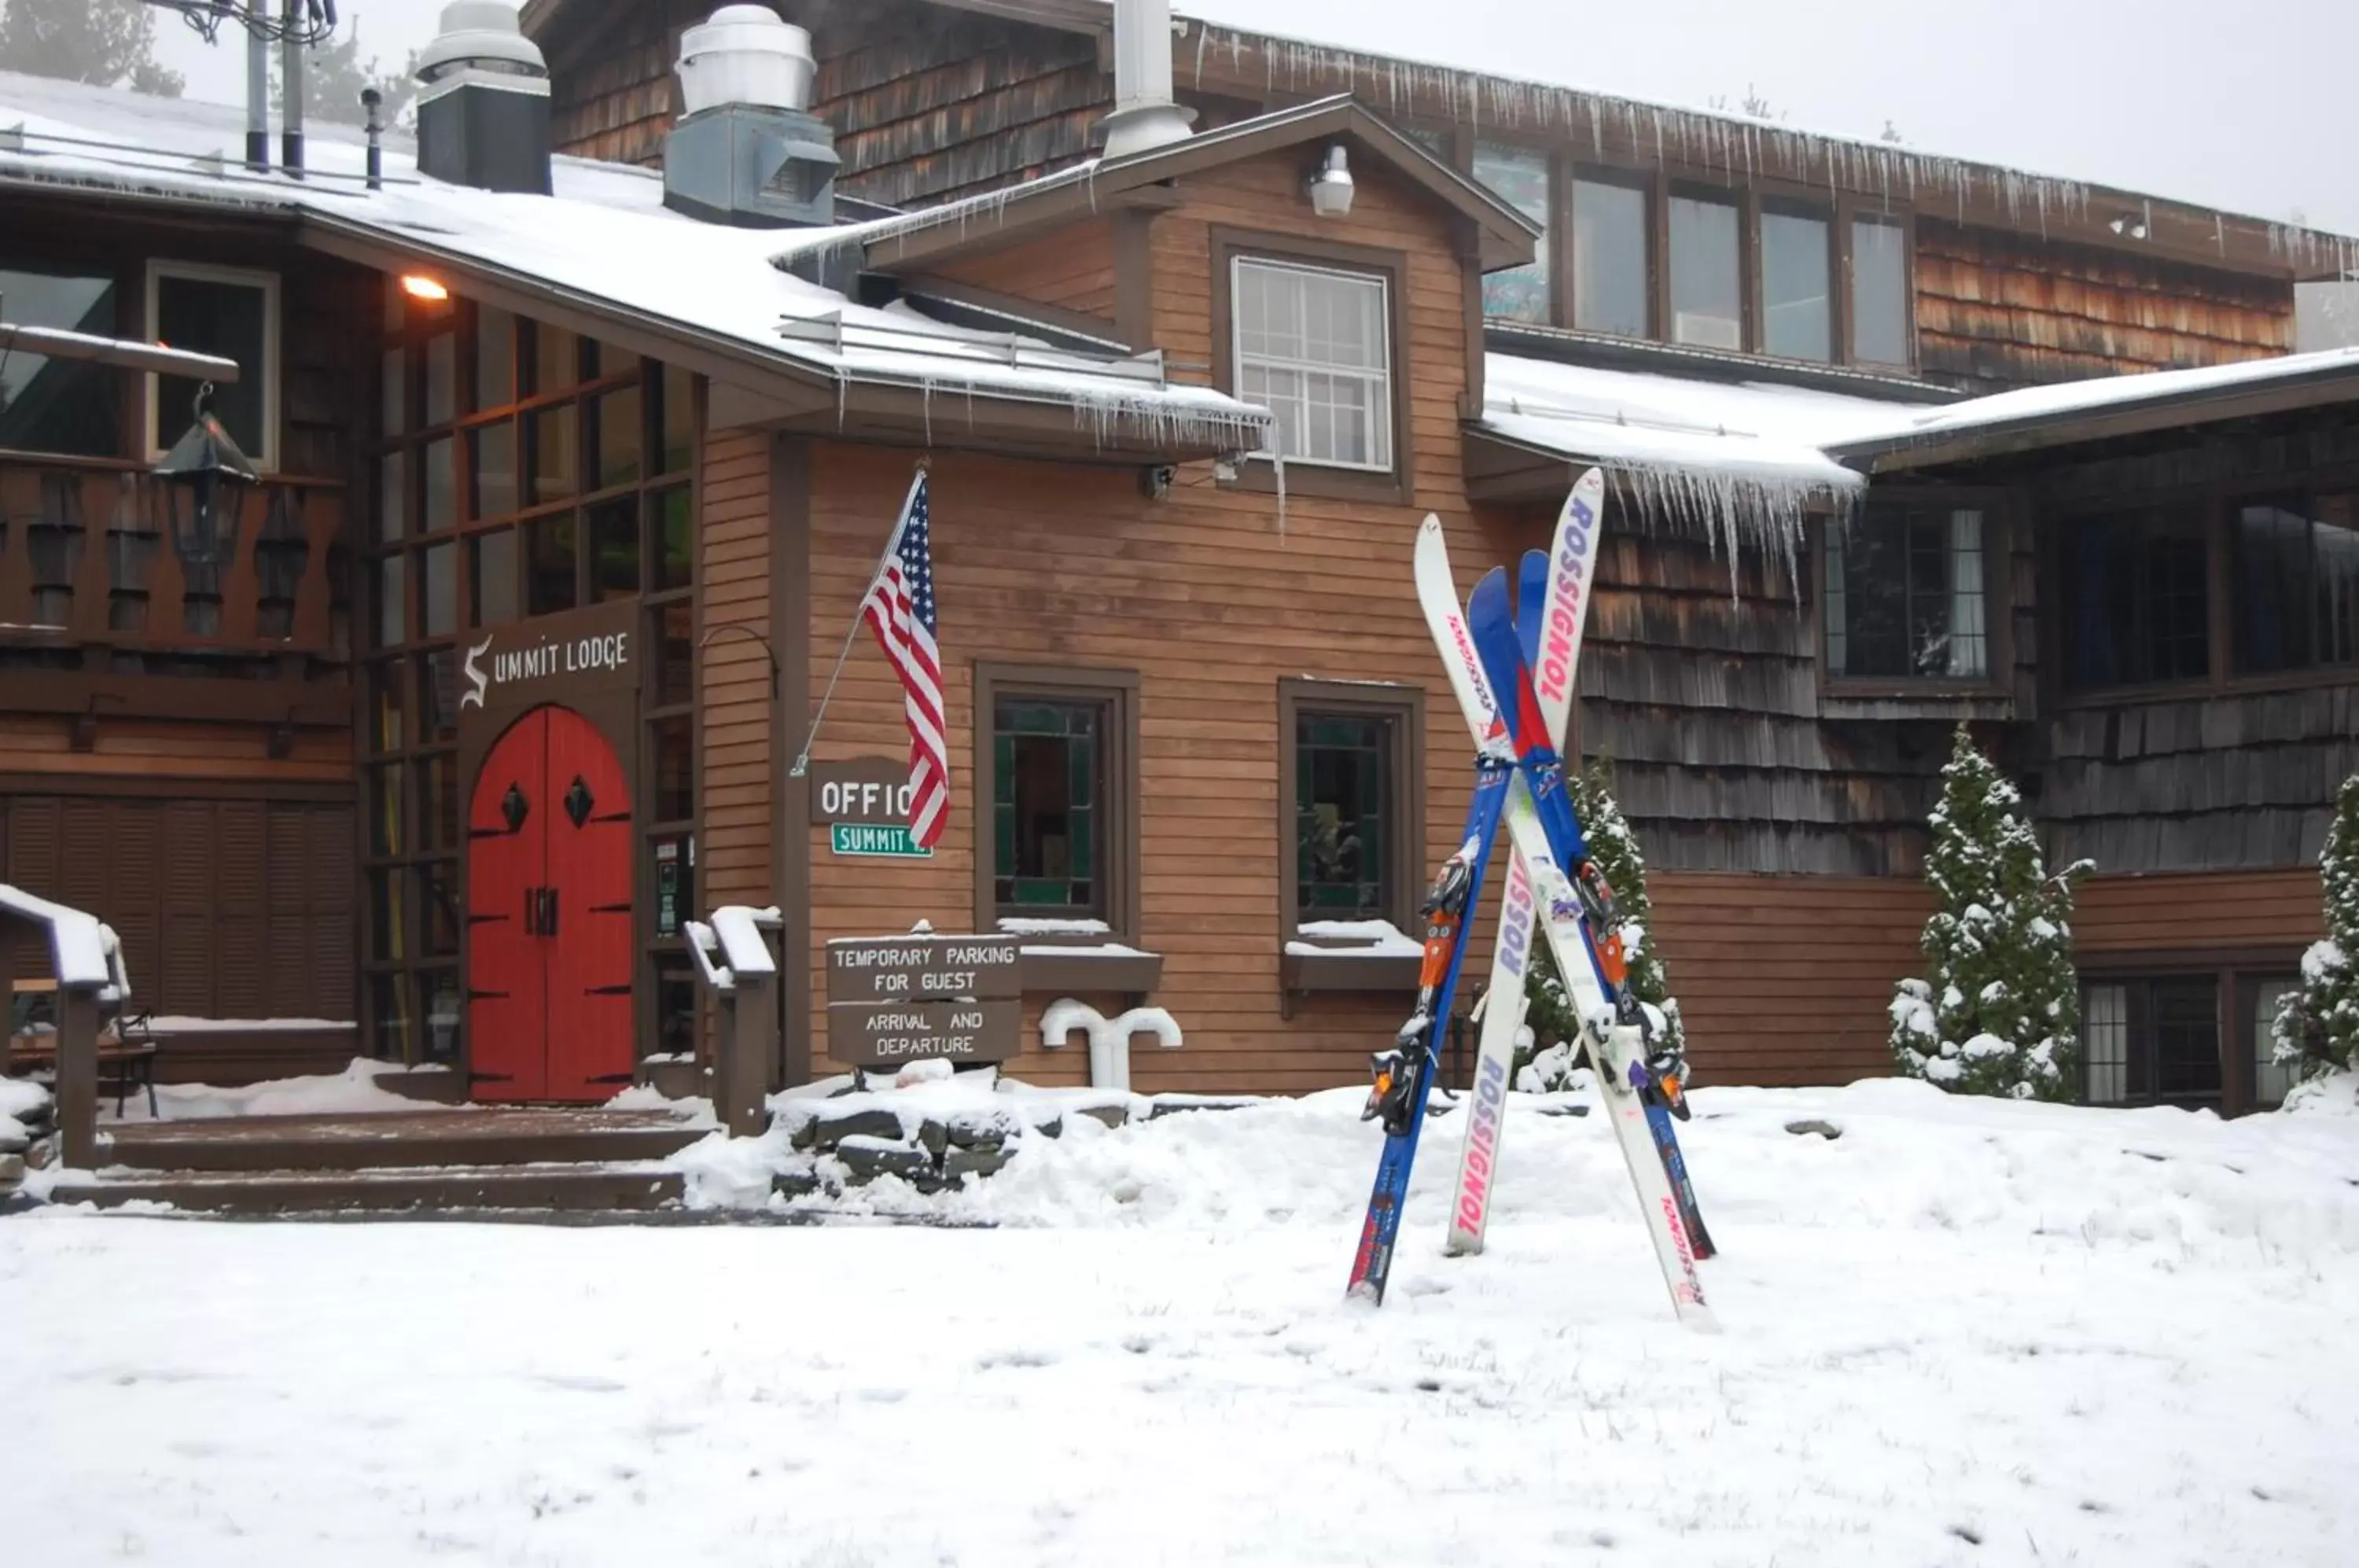 Facade/entrance, Winter in Summit Lodge